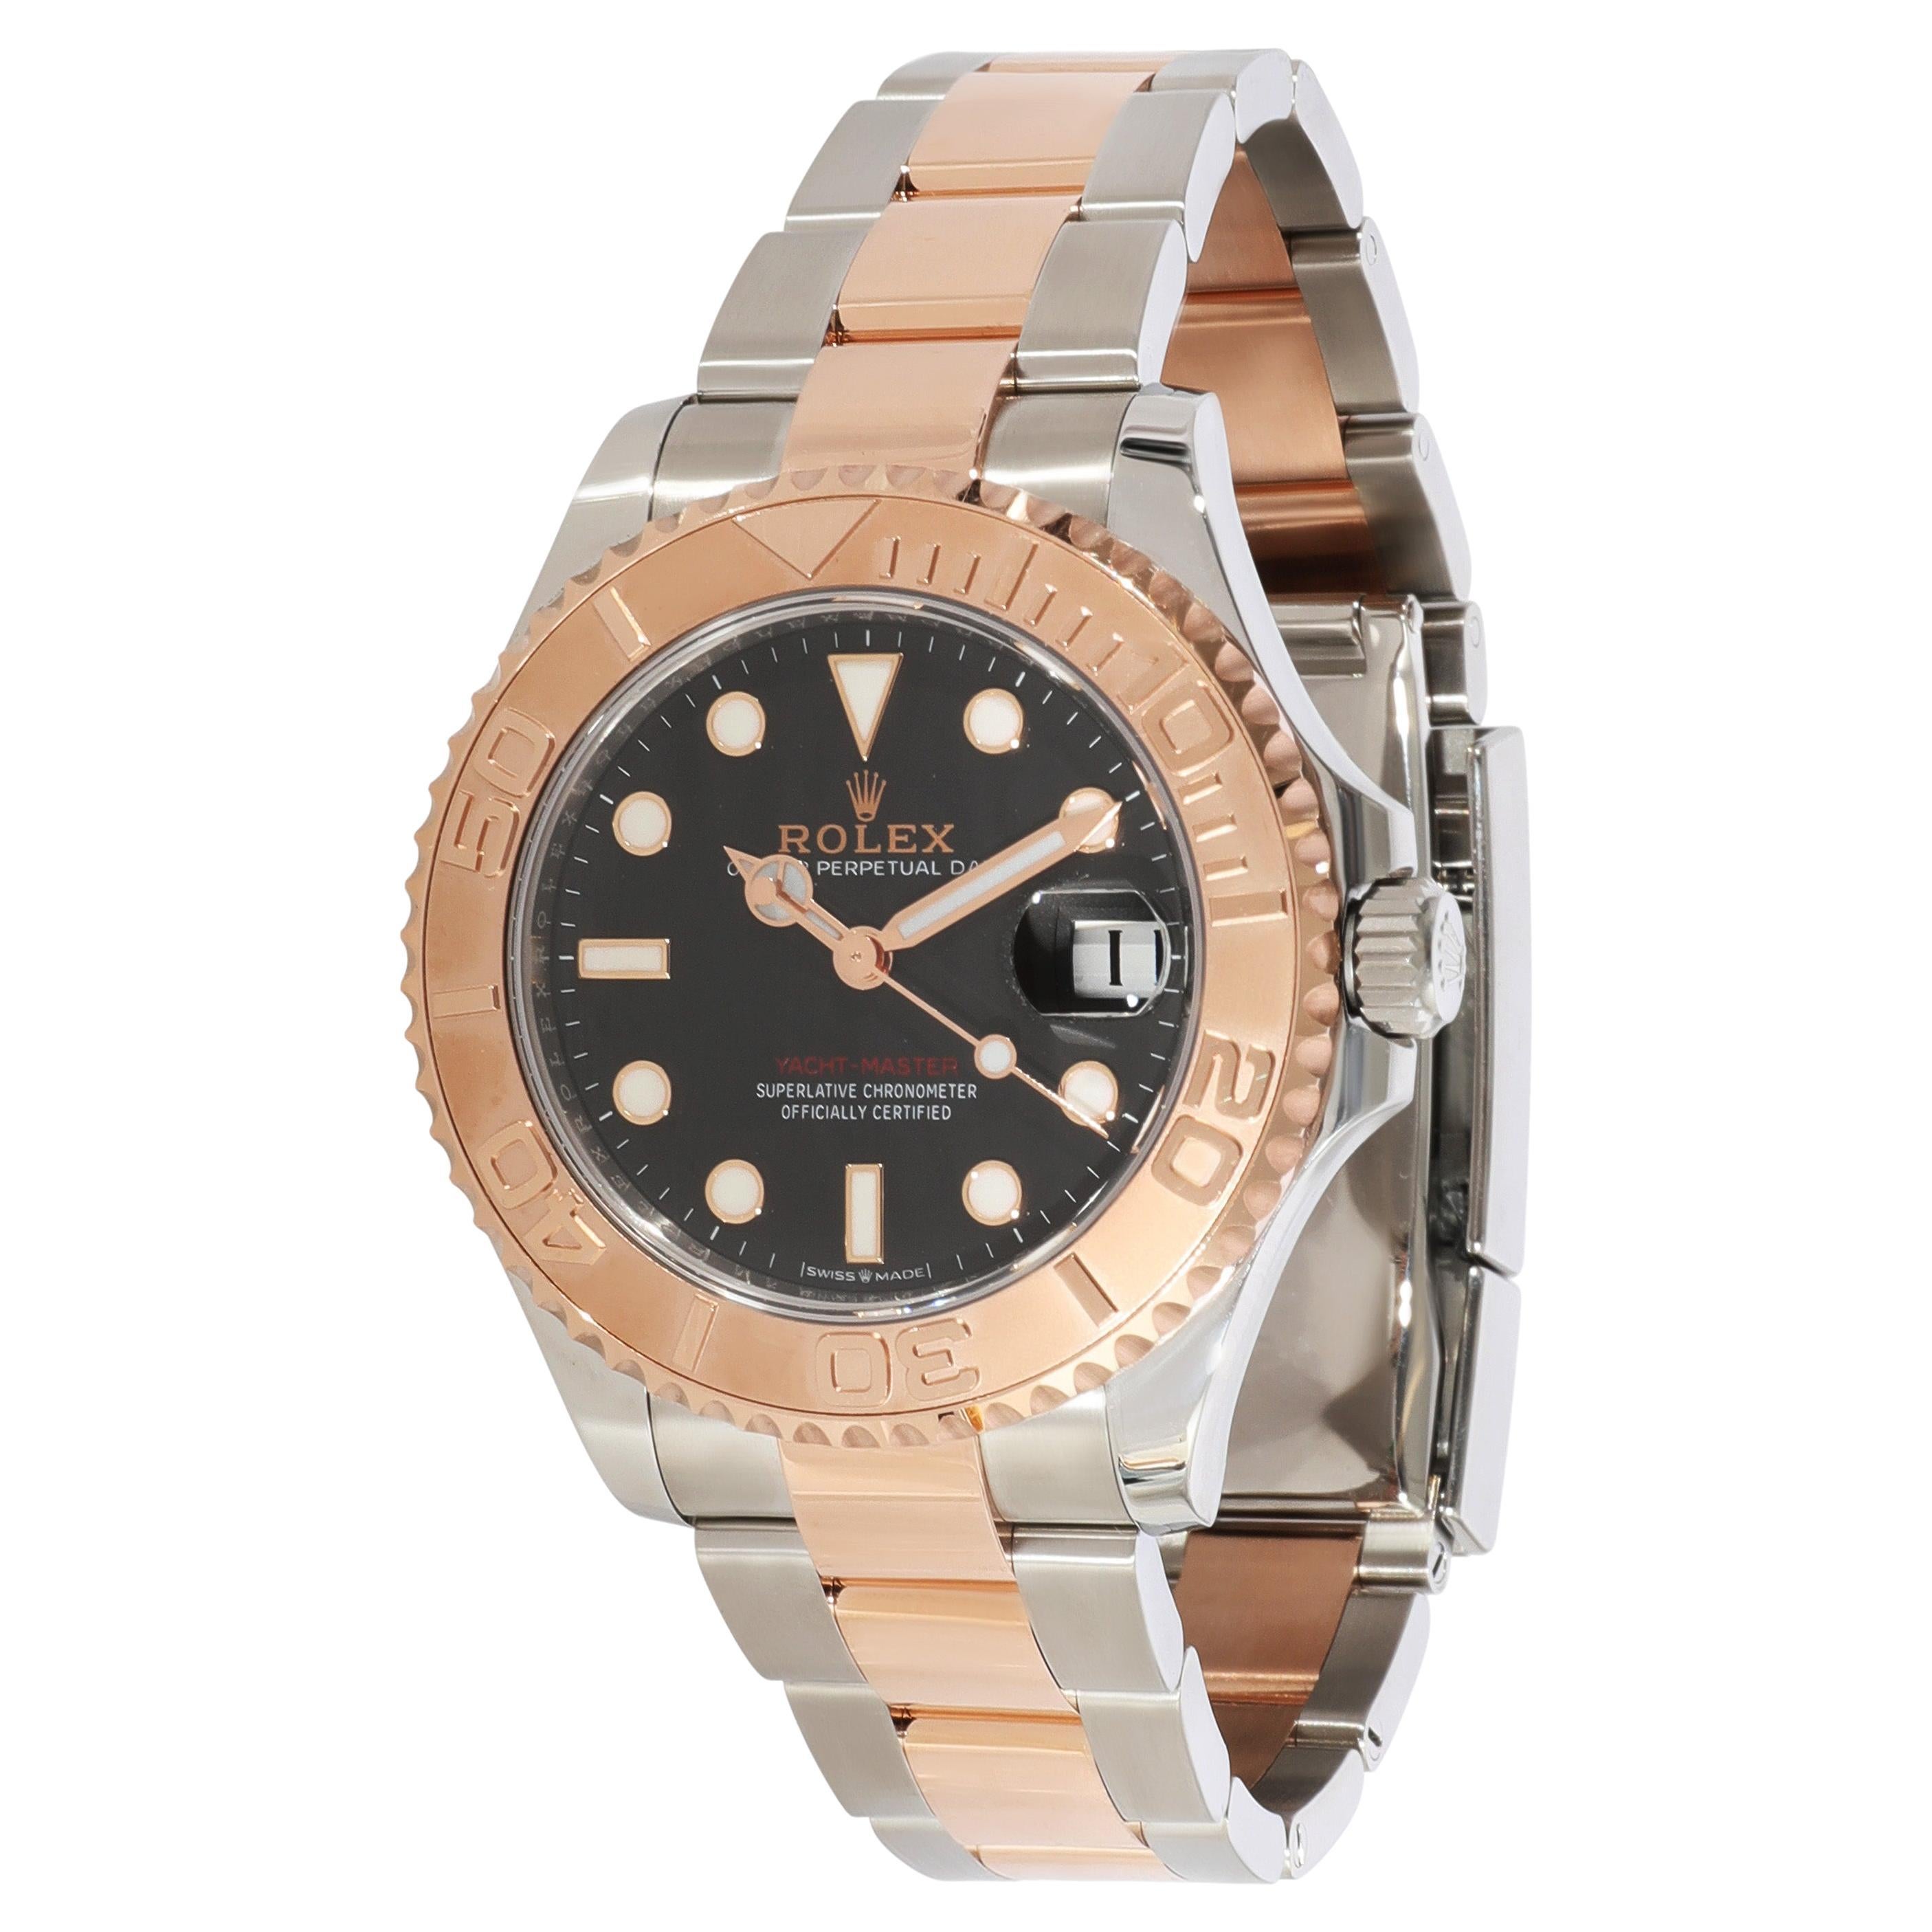 Rolex Yacht Master 268621 Unisex Watch in Stainless Steel/Rose Gold